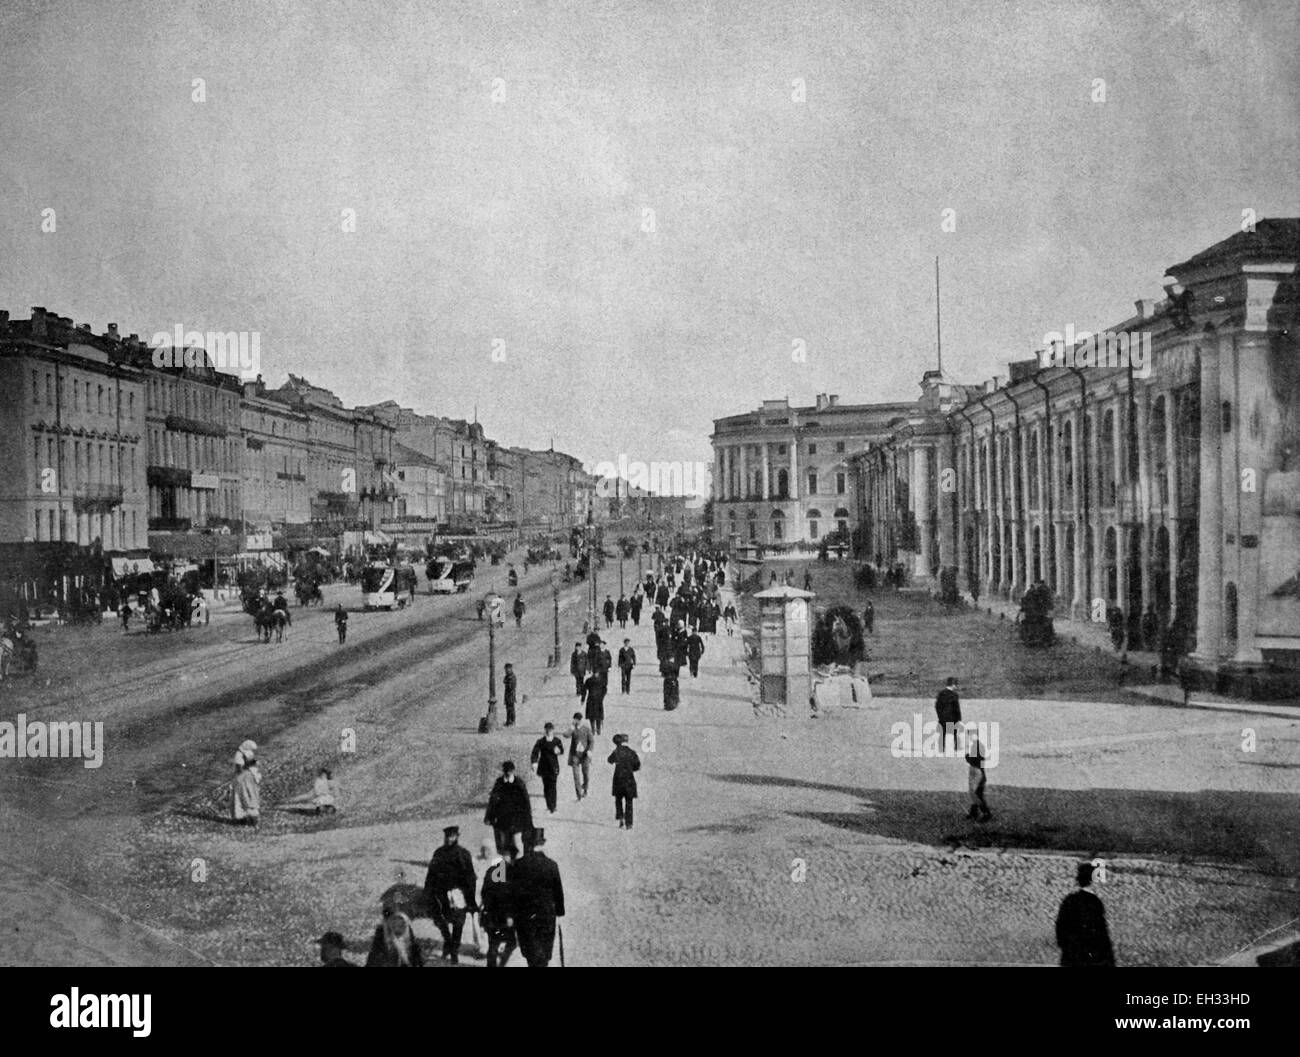 Frühe autotype von Nevsky Prospect Avenue, St. Petersburg, Russland, historische Bild, 1884. Stockfoto